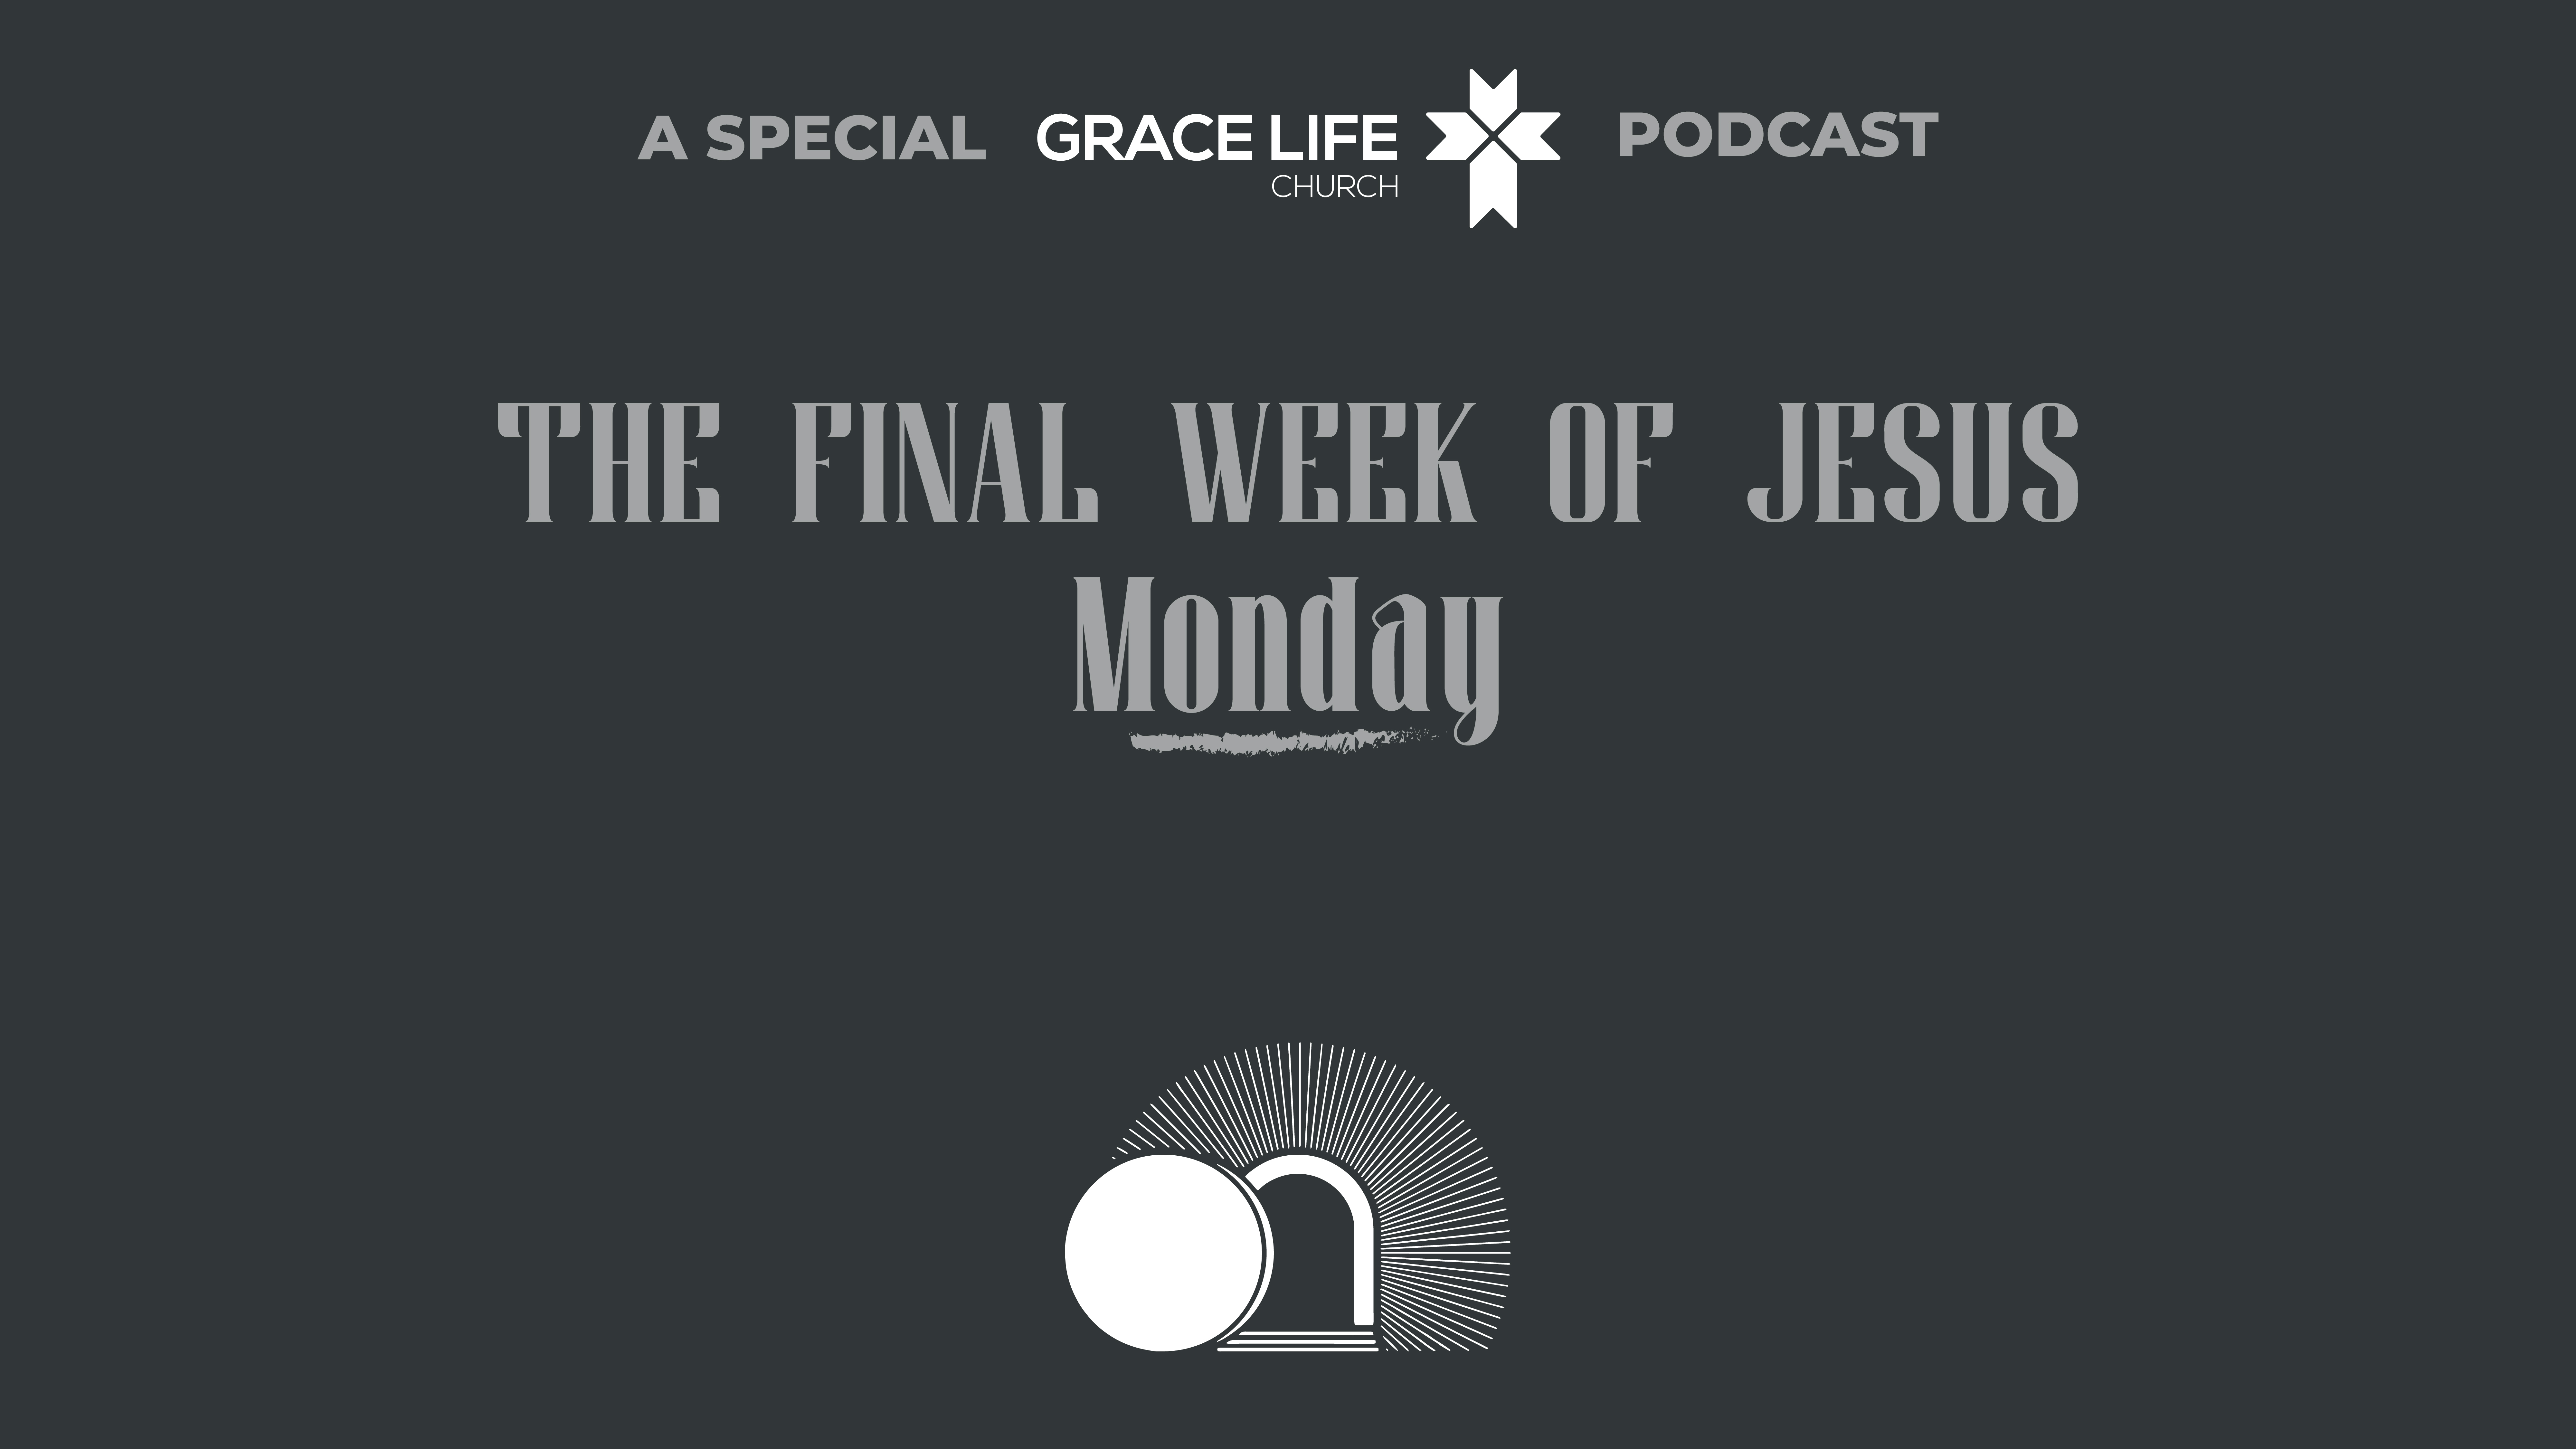 Monday: The Final Week of Jesus